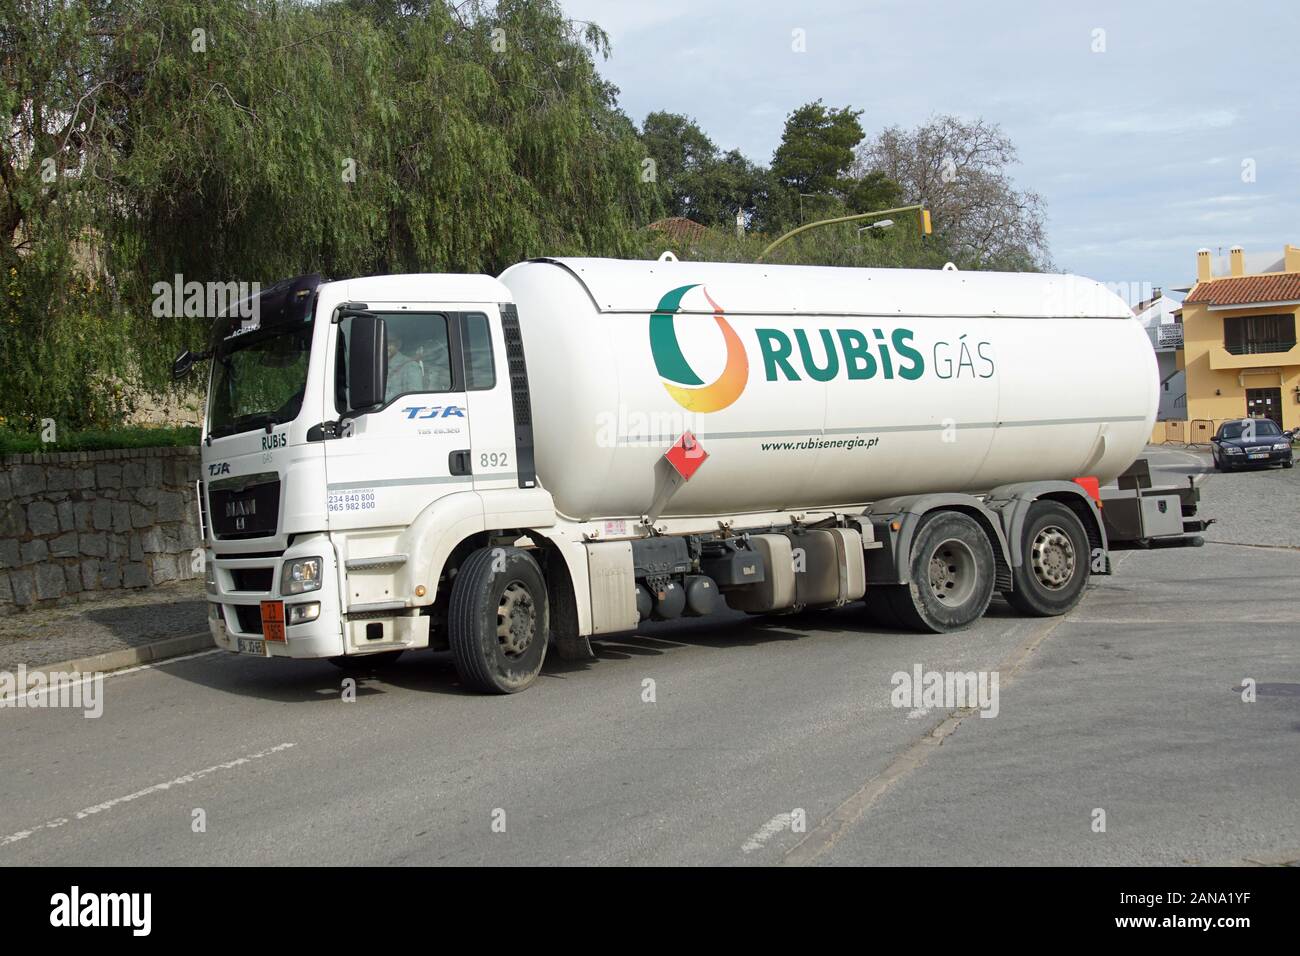 Albufeira, Portugal - December 26, 2019: White Rubis Gas fuel tanker truck. Stock Photo